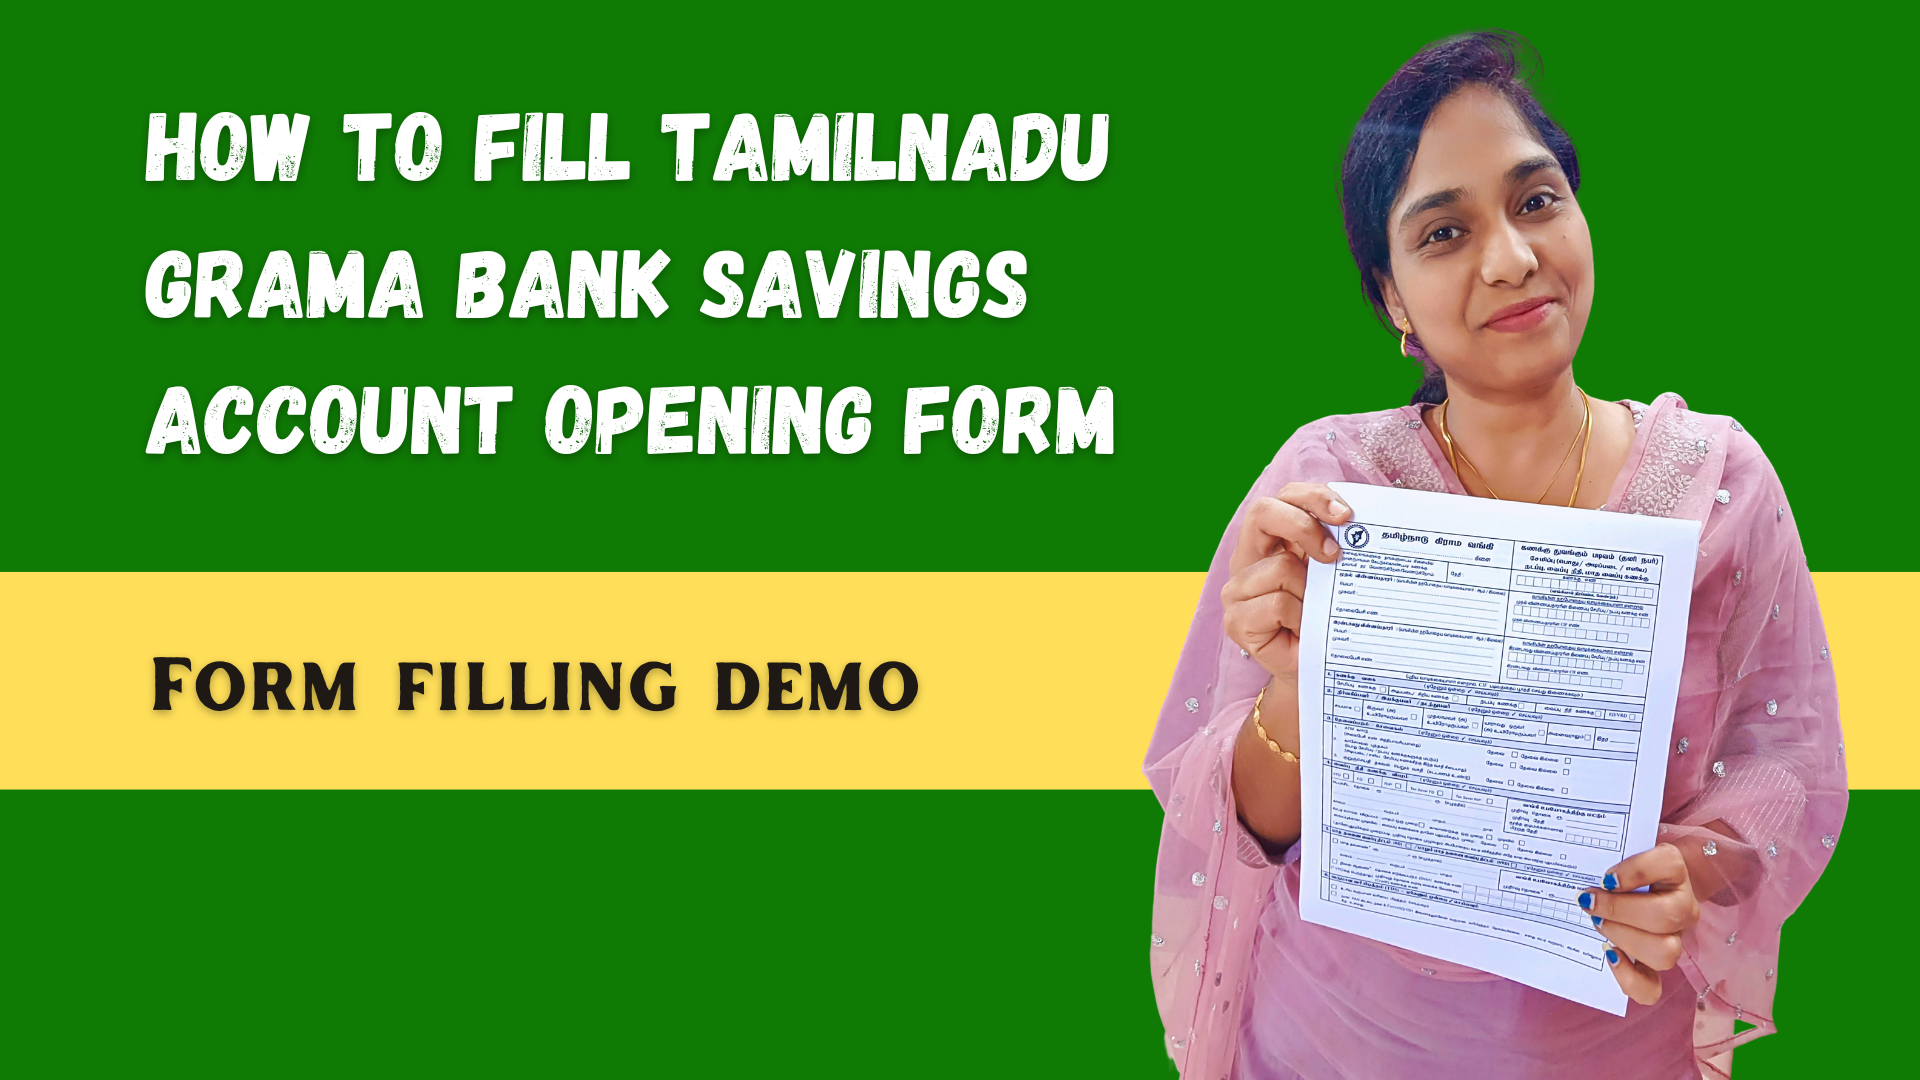 Tamil nadu grama bank account opening form